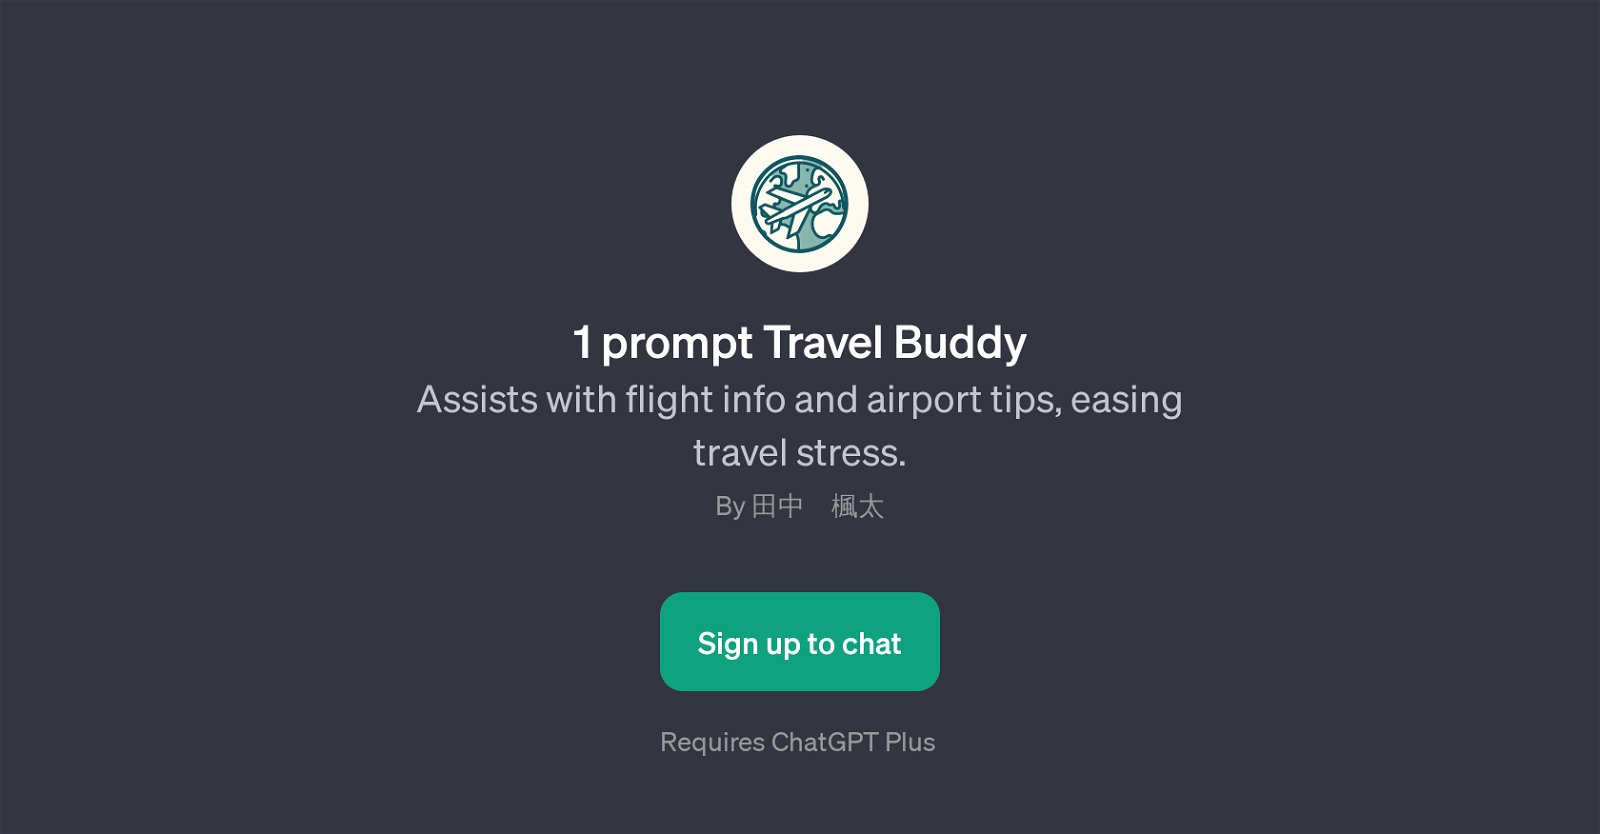 1 prompt Travel Buddy website